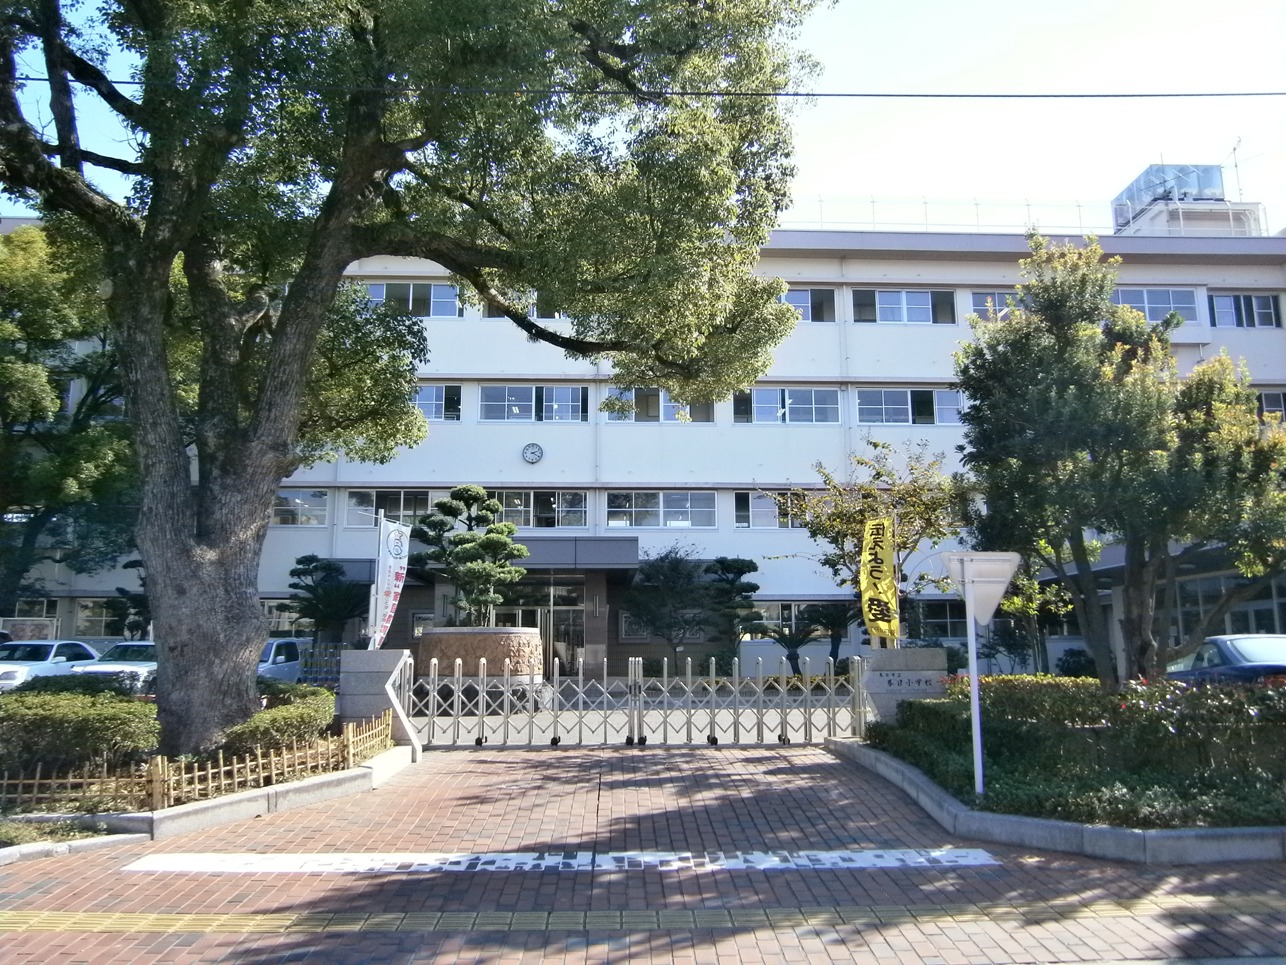 Primary school. 300m to Kasuga Municipal Kasuga elementary school (elementary school)